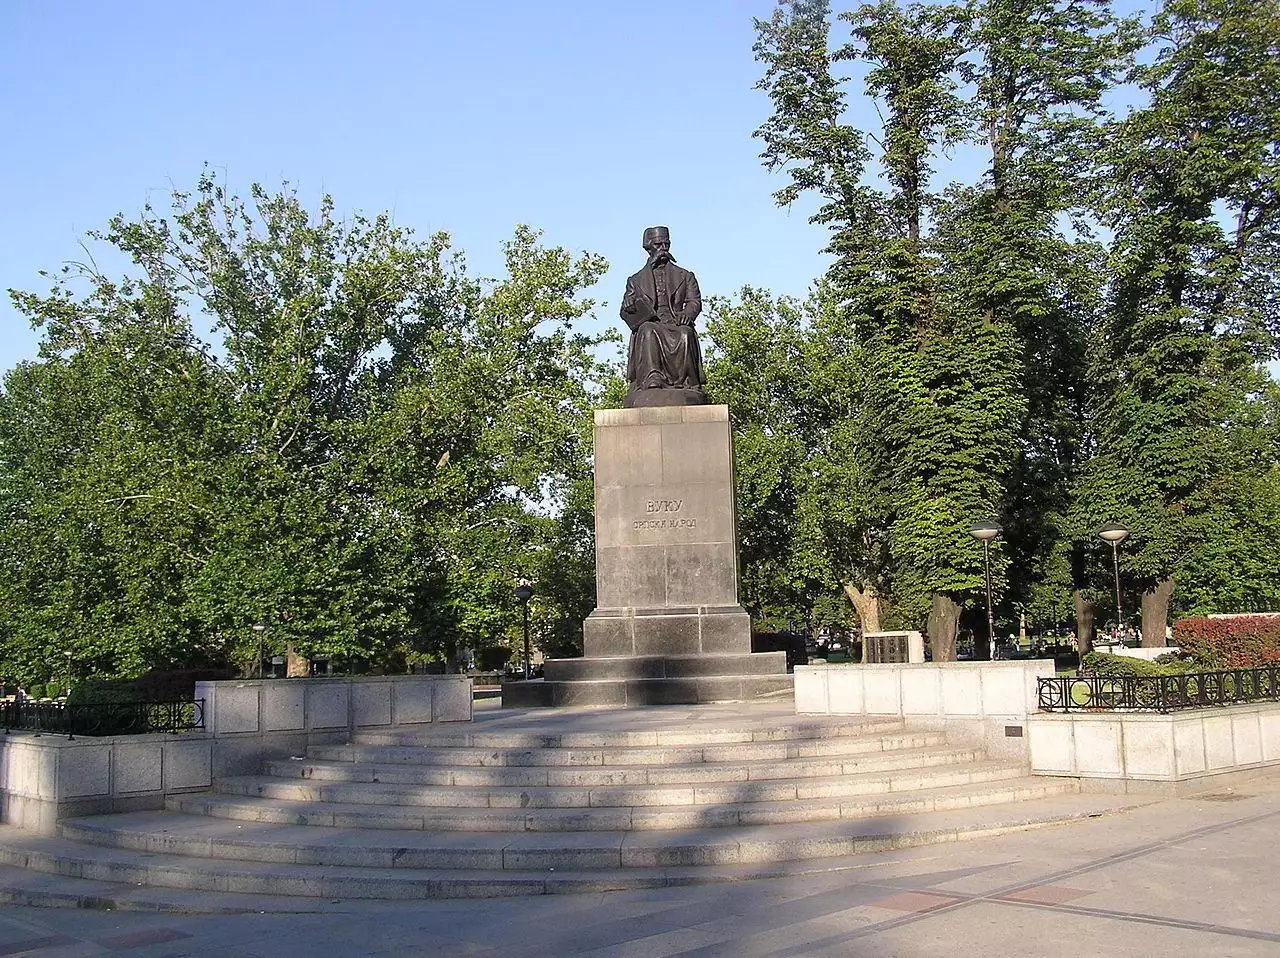 Vuk's Monument